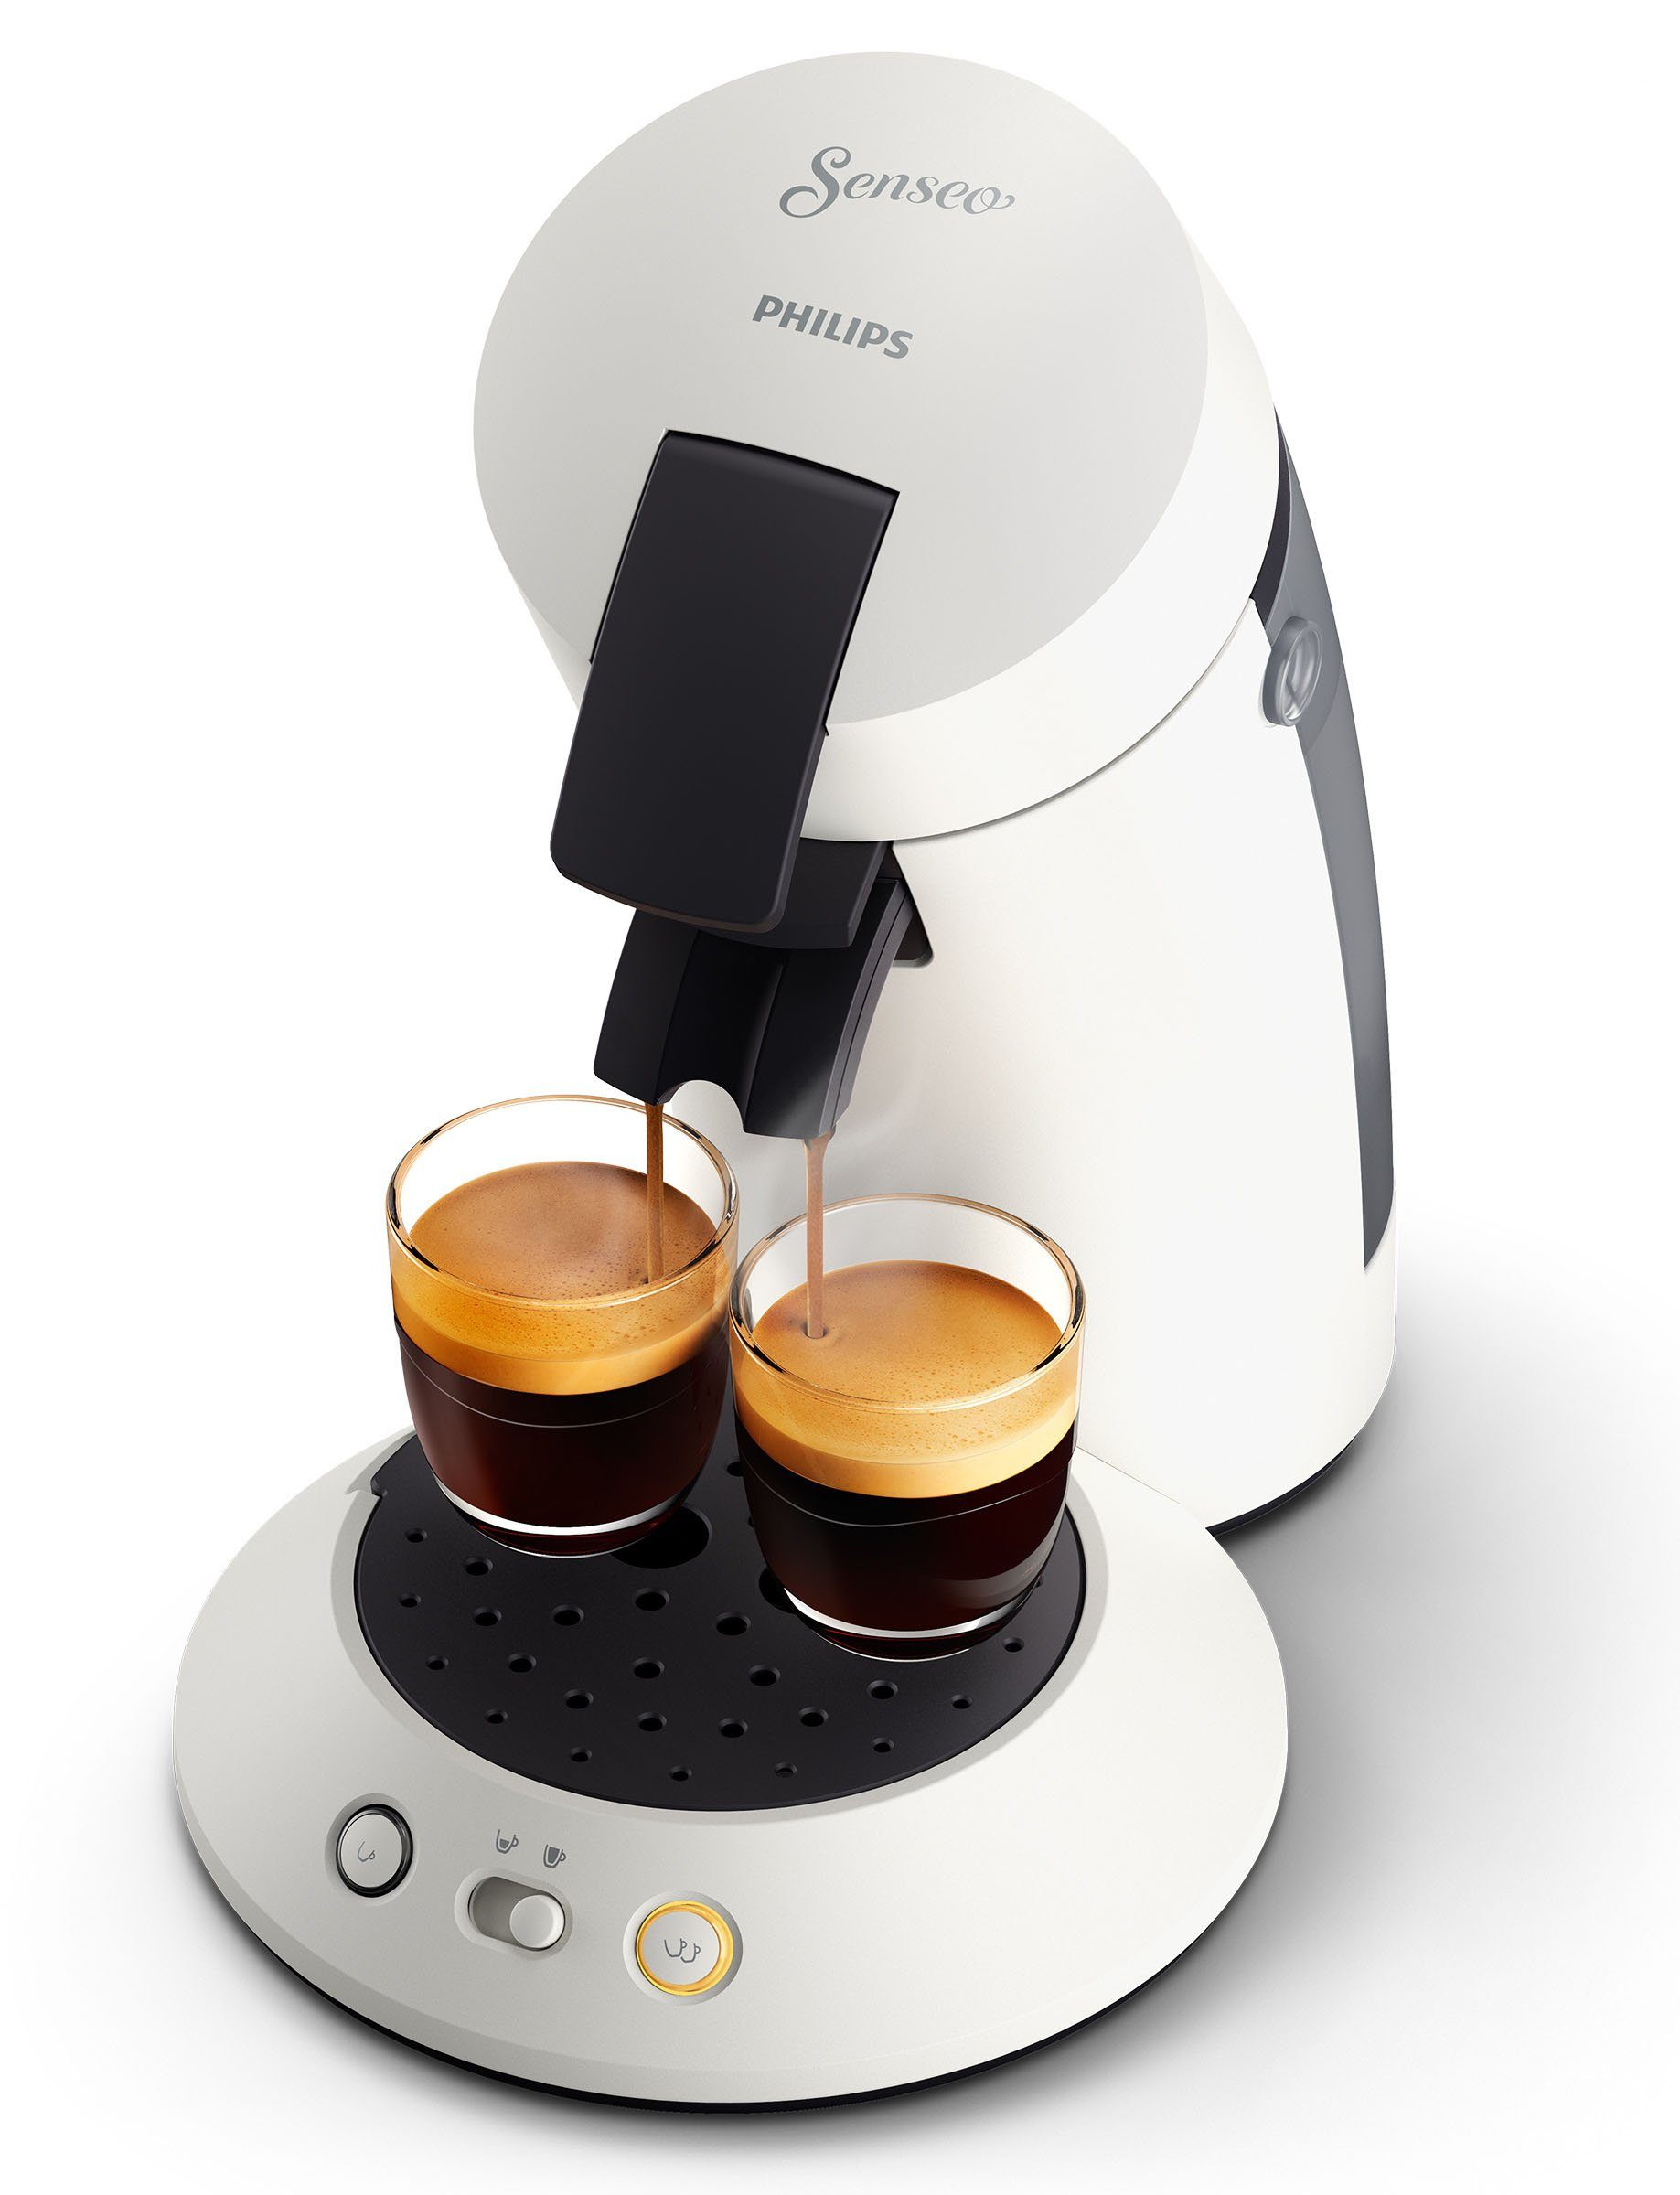 Philips Senseo Gratis-Zugaben 80% (Wert Memo-Funktion, 5,-UVP) +3 € aus Plus recyceltem Plastik, Kaffeepadmaschine CSA210/10, Kaffeespezialitäten, Original